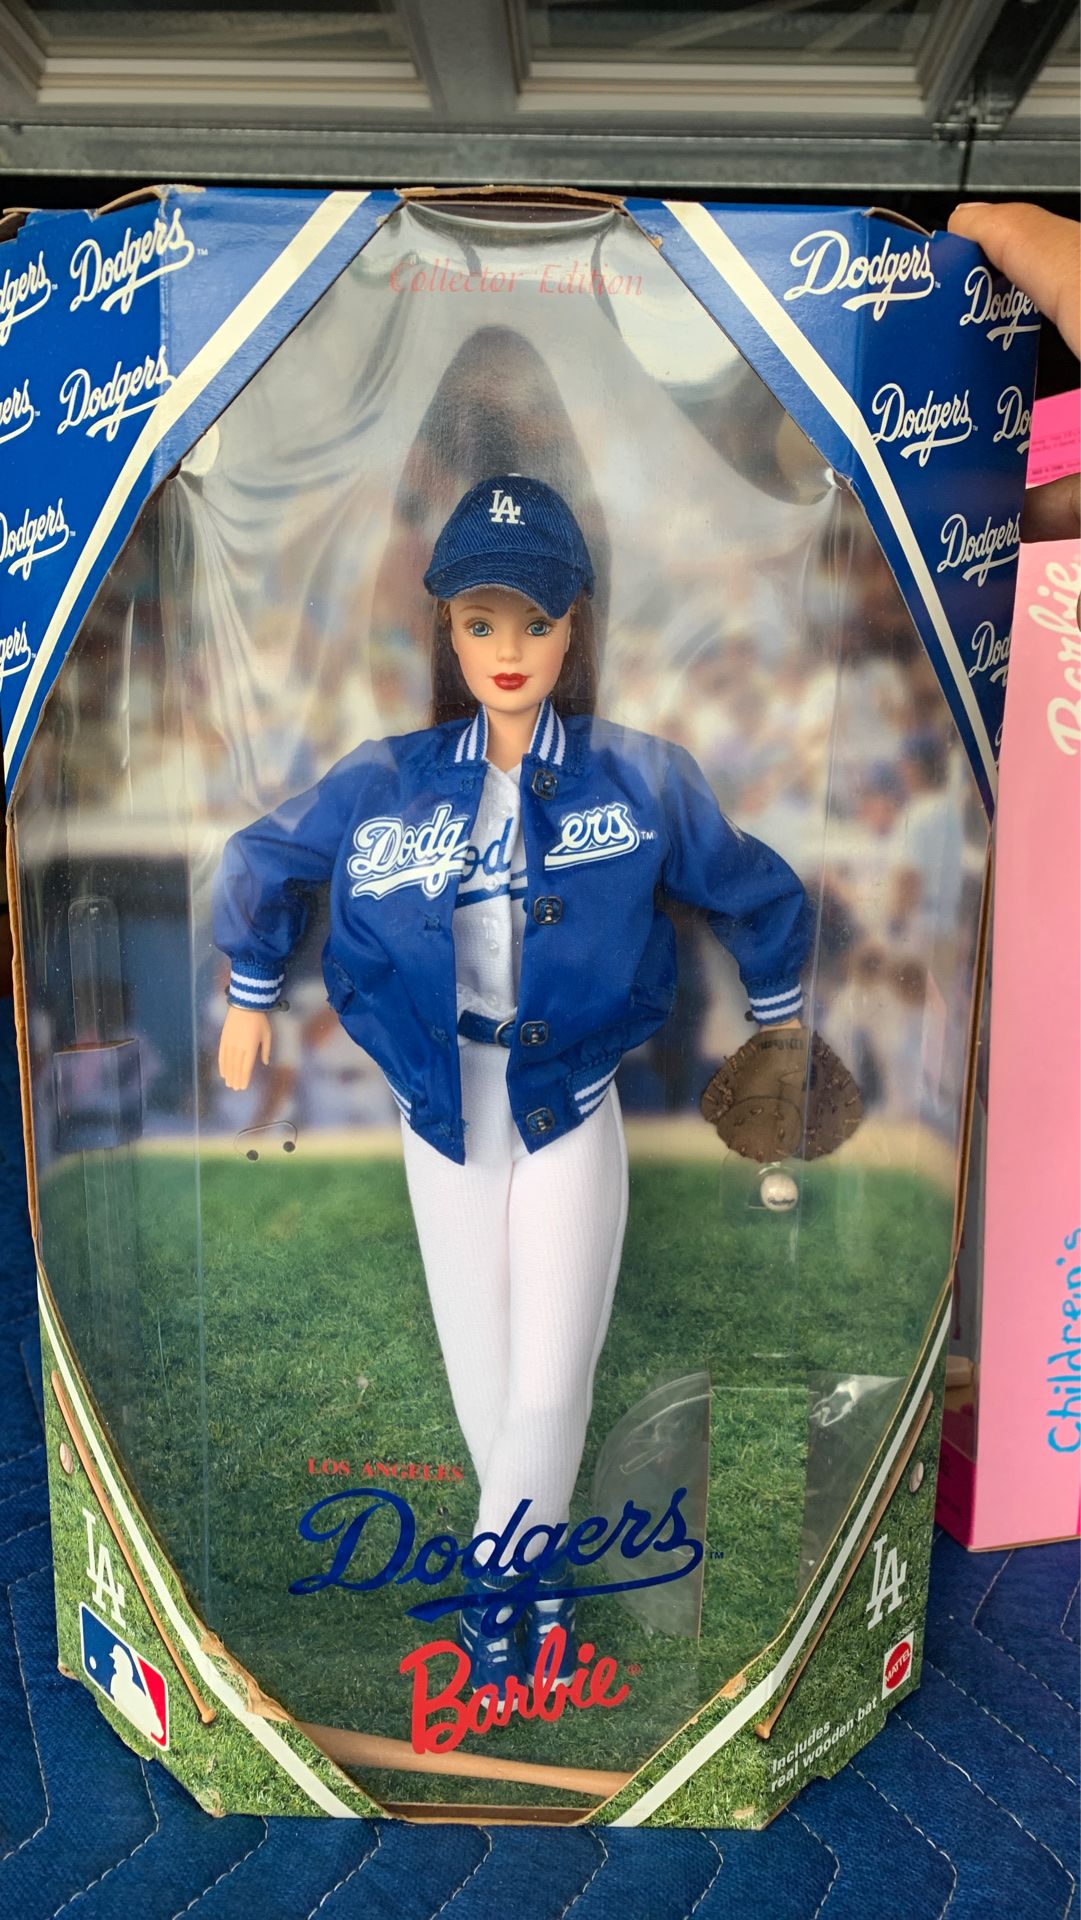 Dodgers Barbie